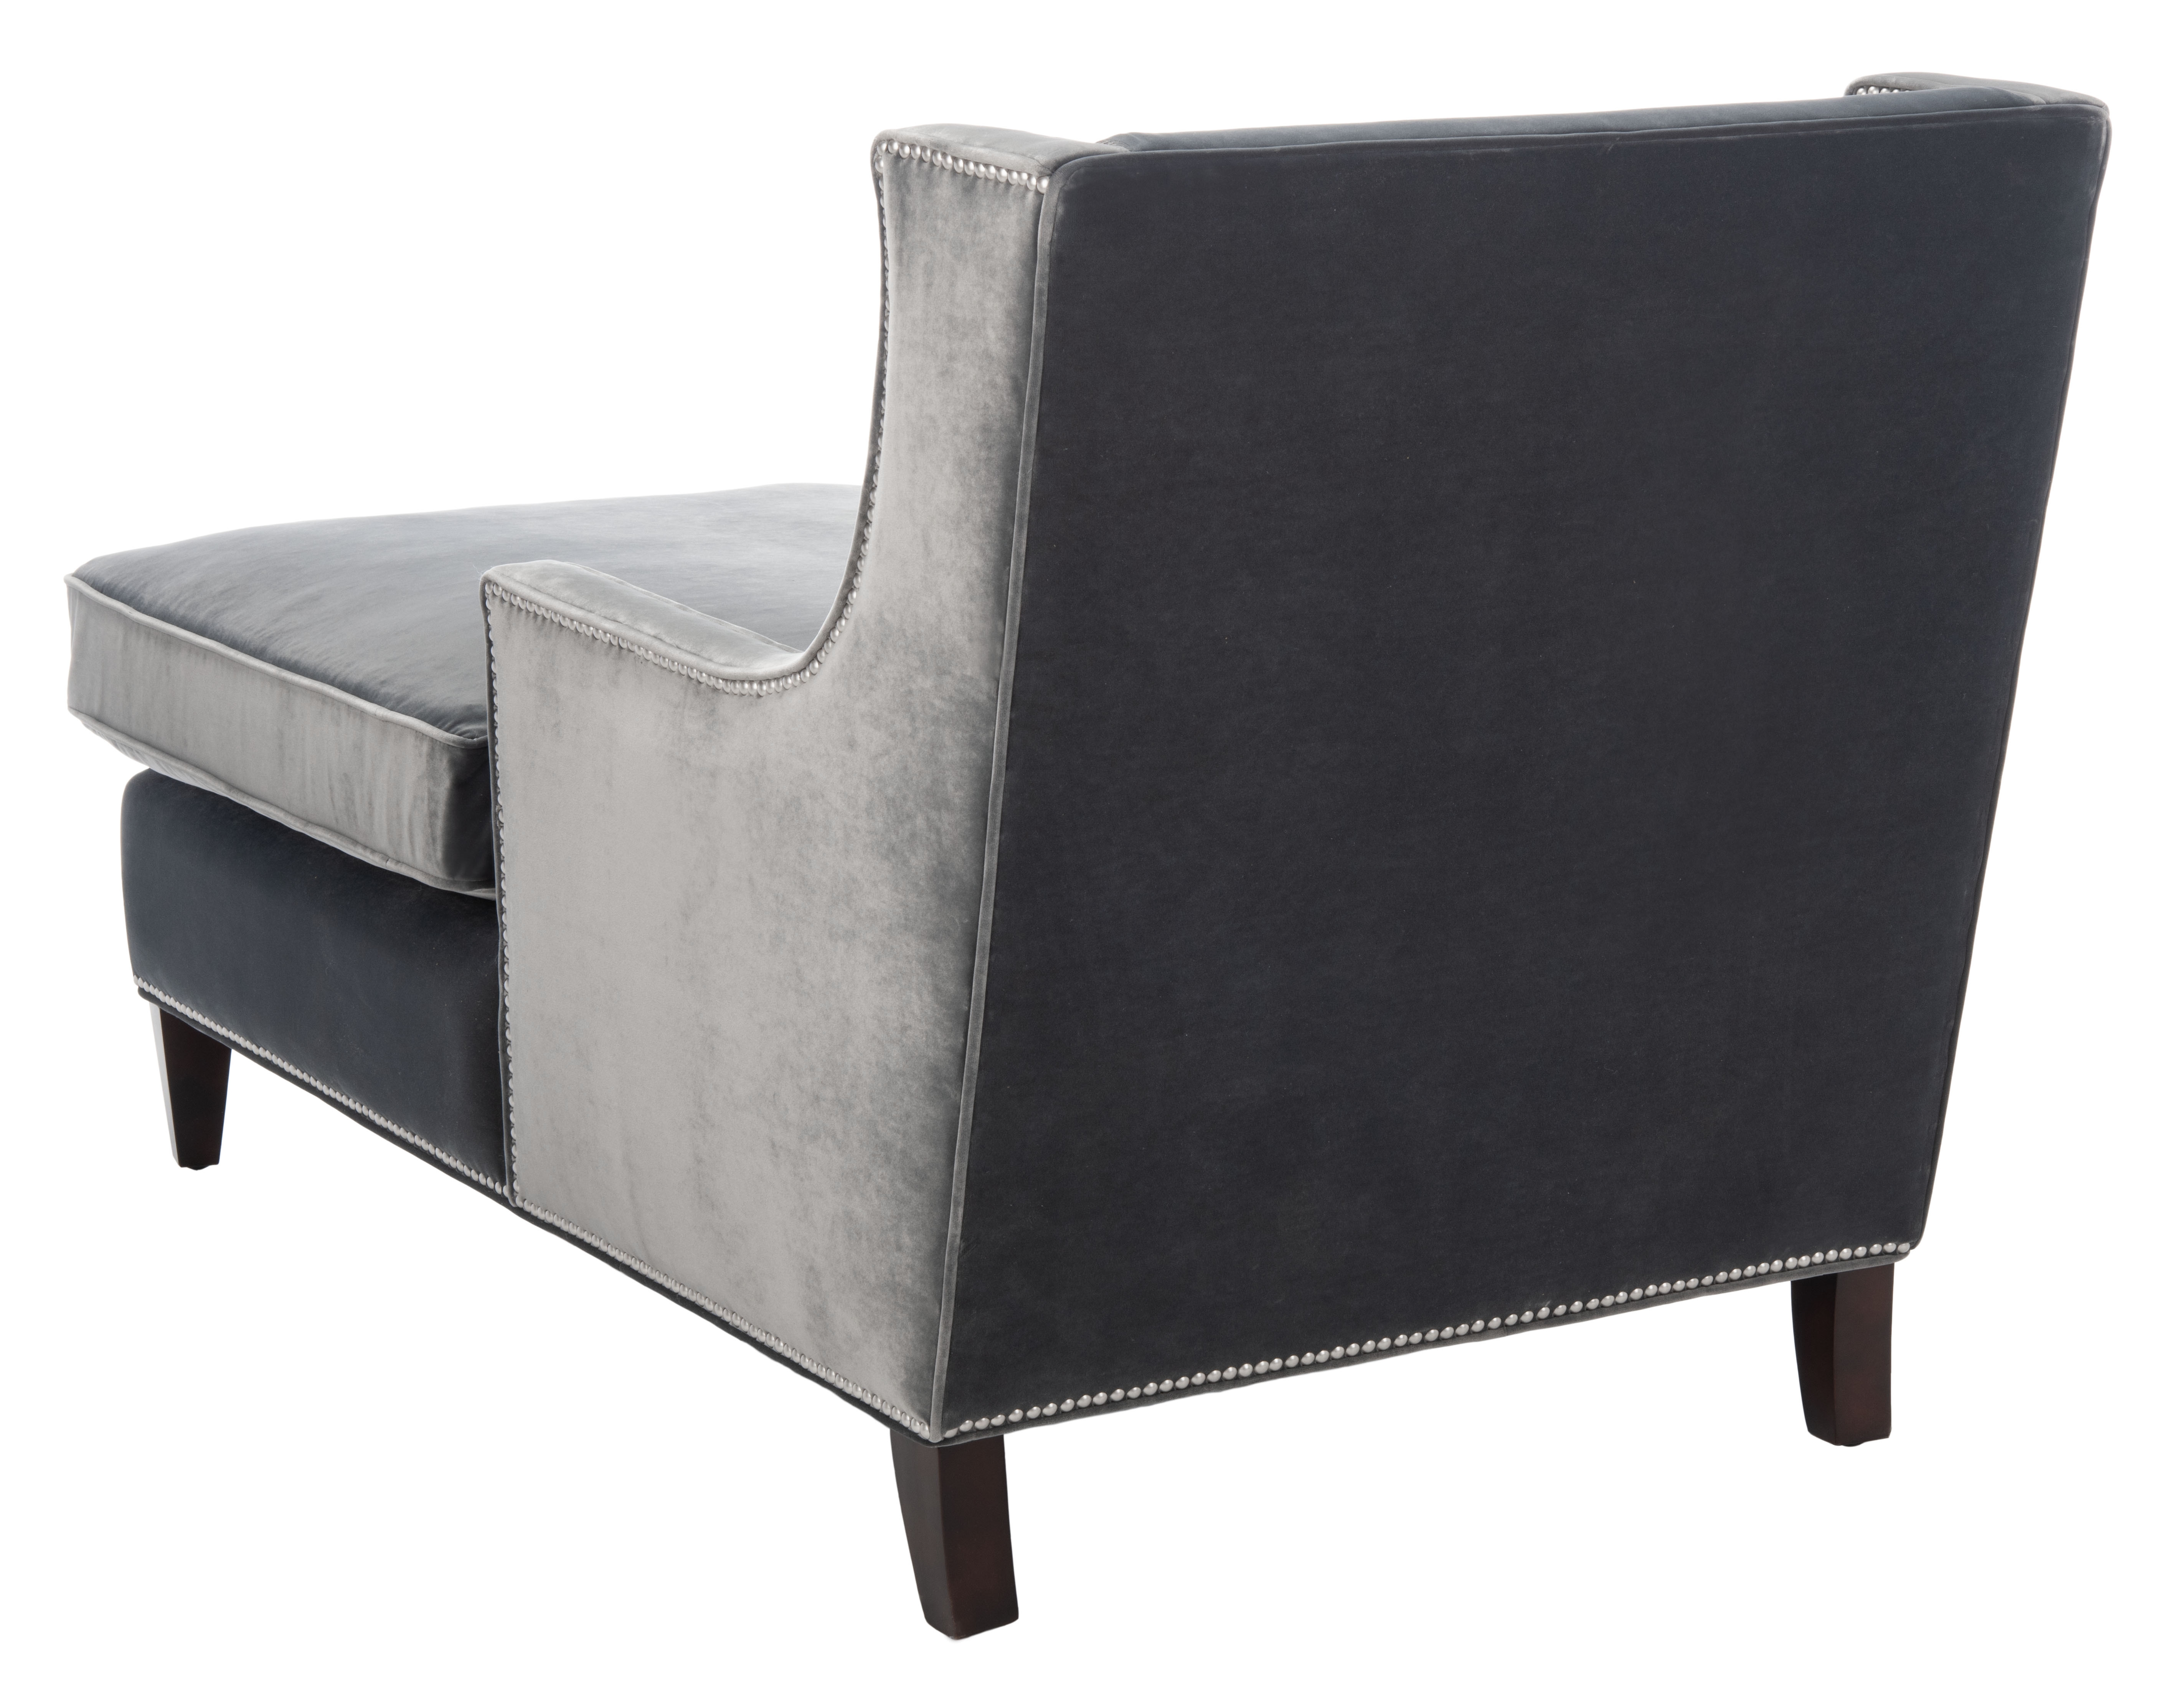 Vitali Studded Chaise - Charcoal - Arlo Home - Image 4